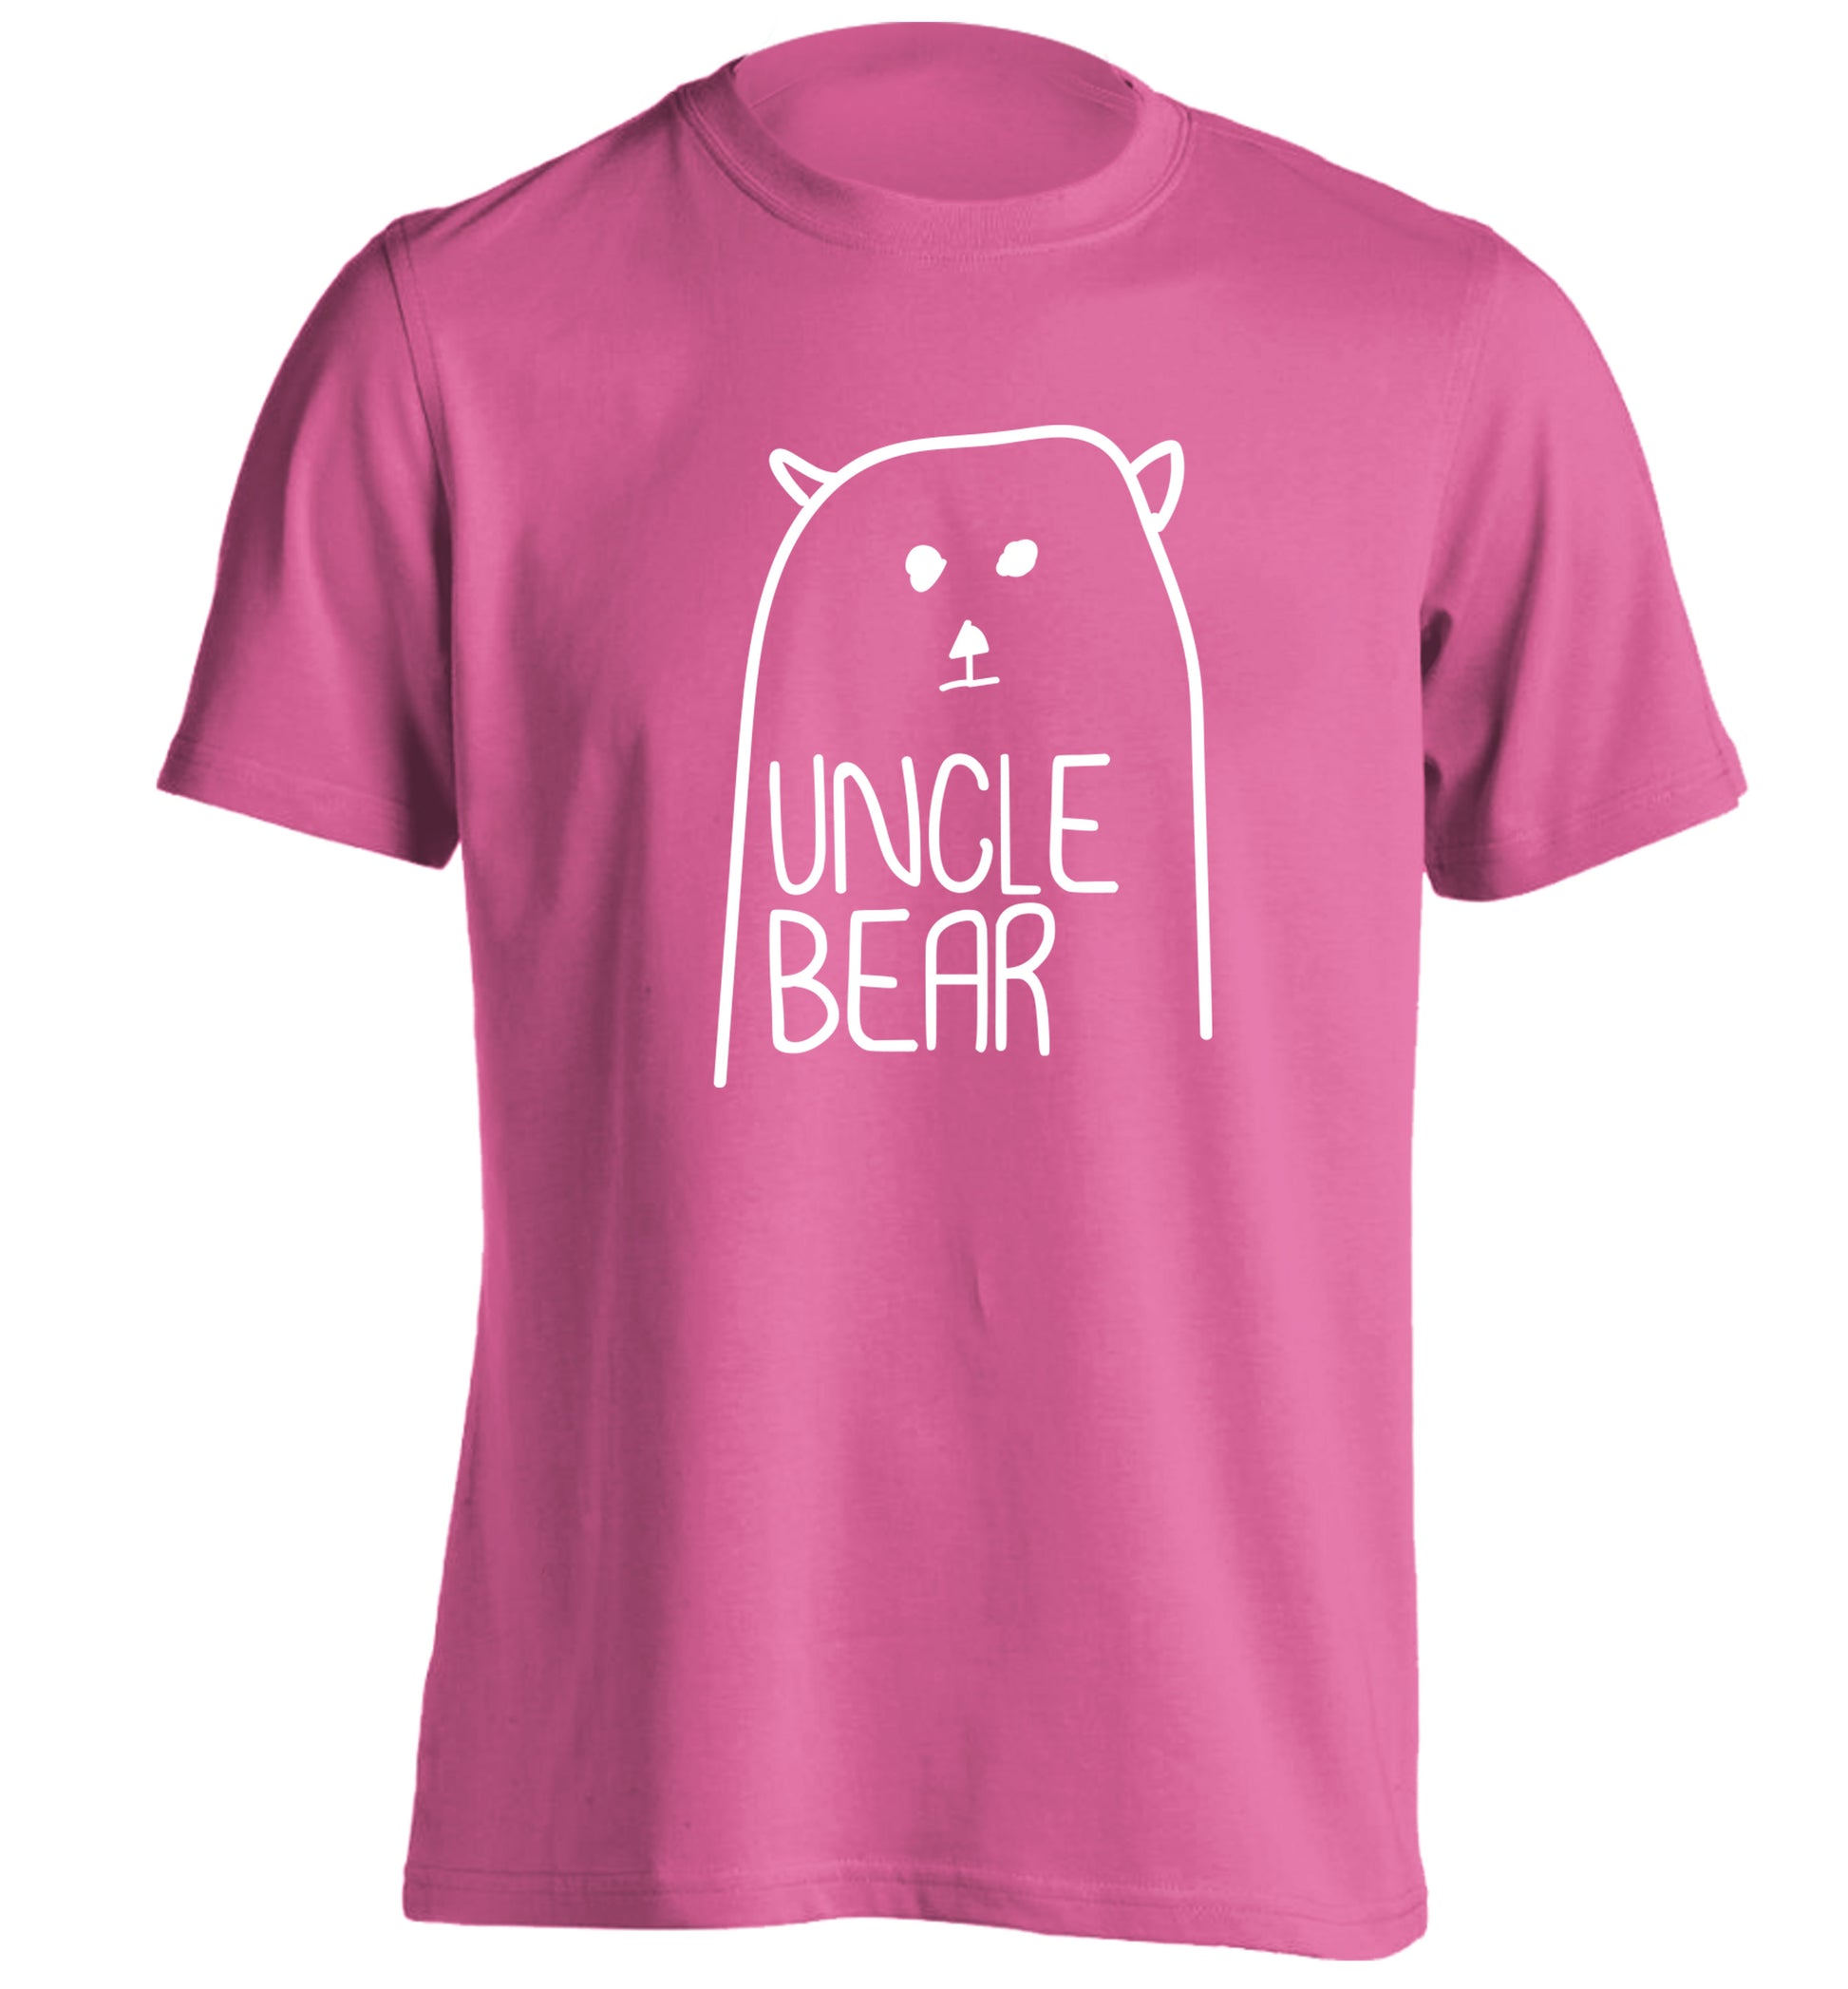 Uncle bear adults unisex pink Tshirt 2XL